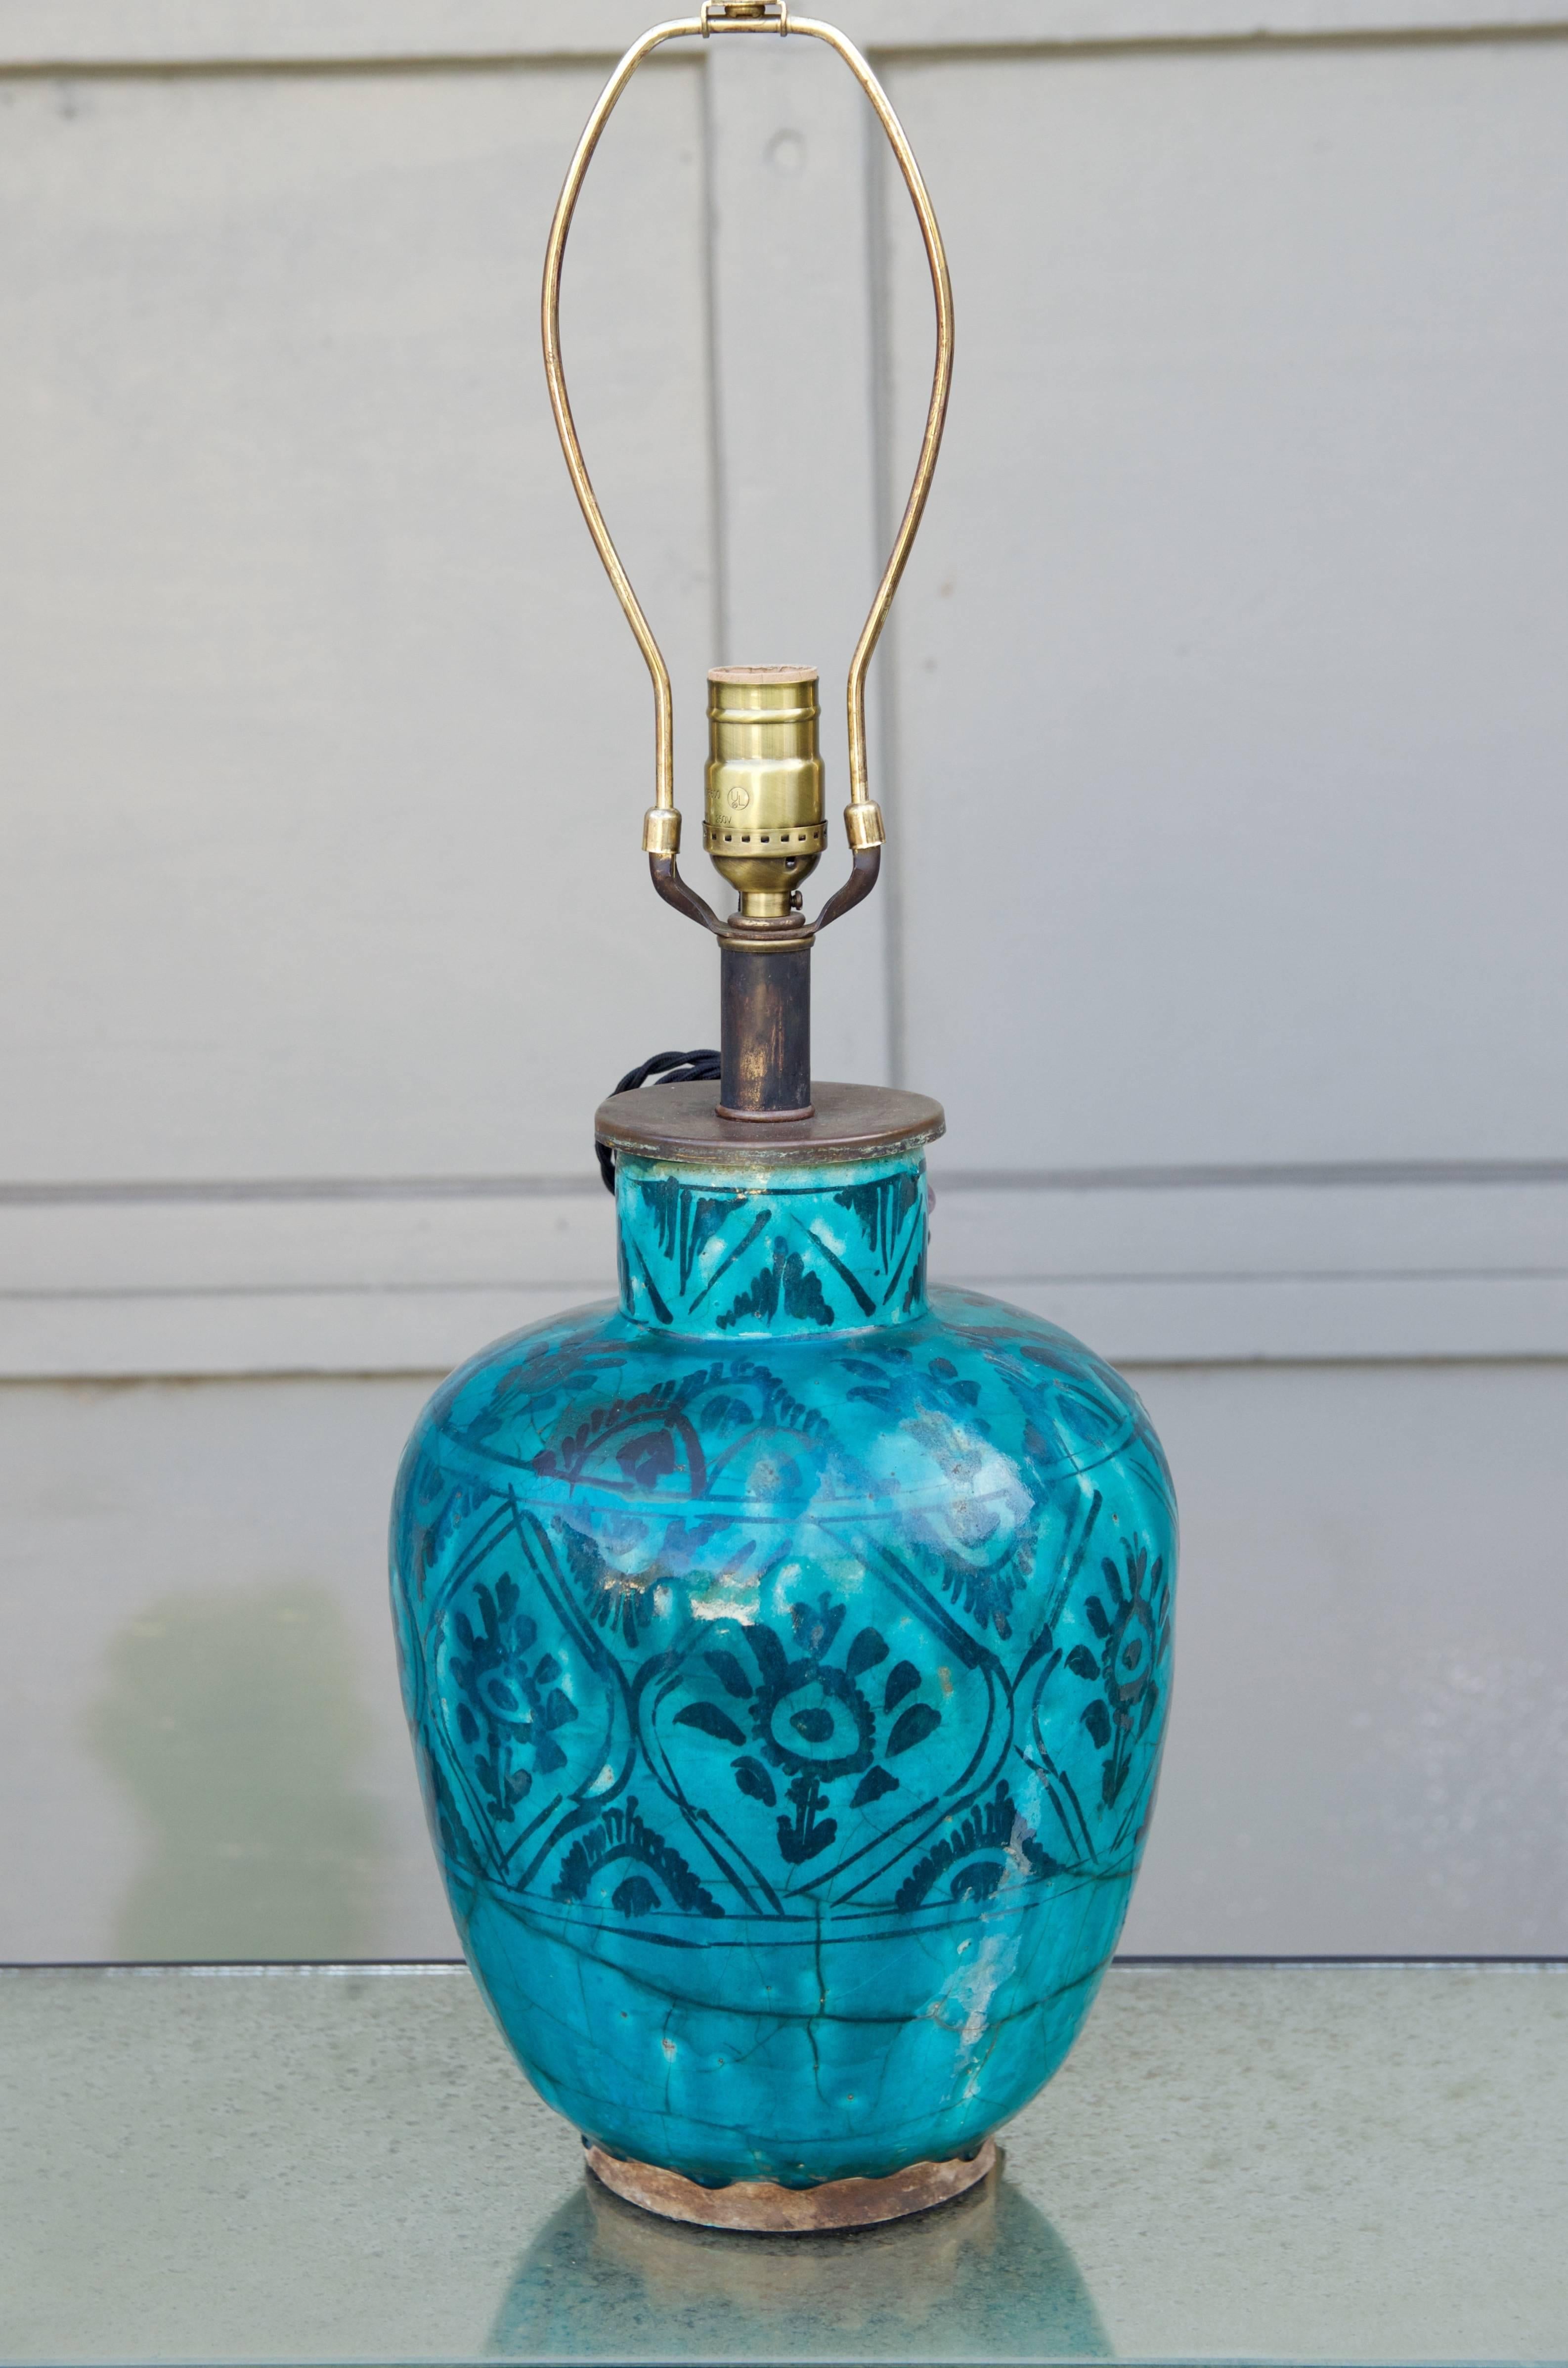 Islamic Antique Turquoise Glazed Ceramic Persian Table Lamp